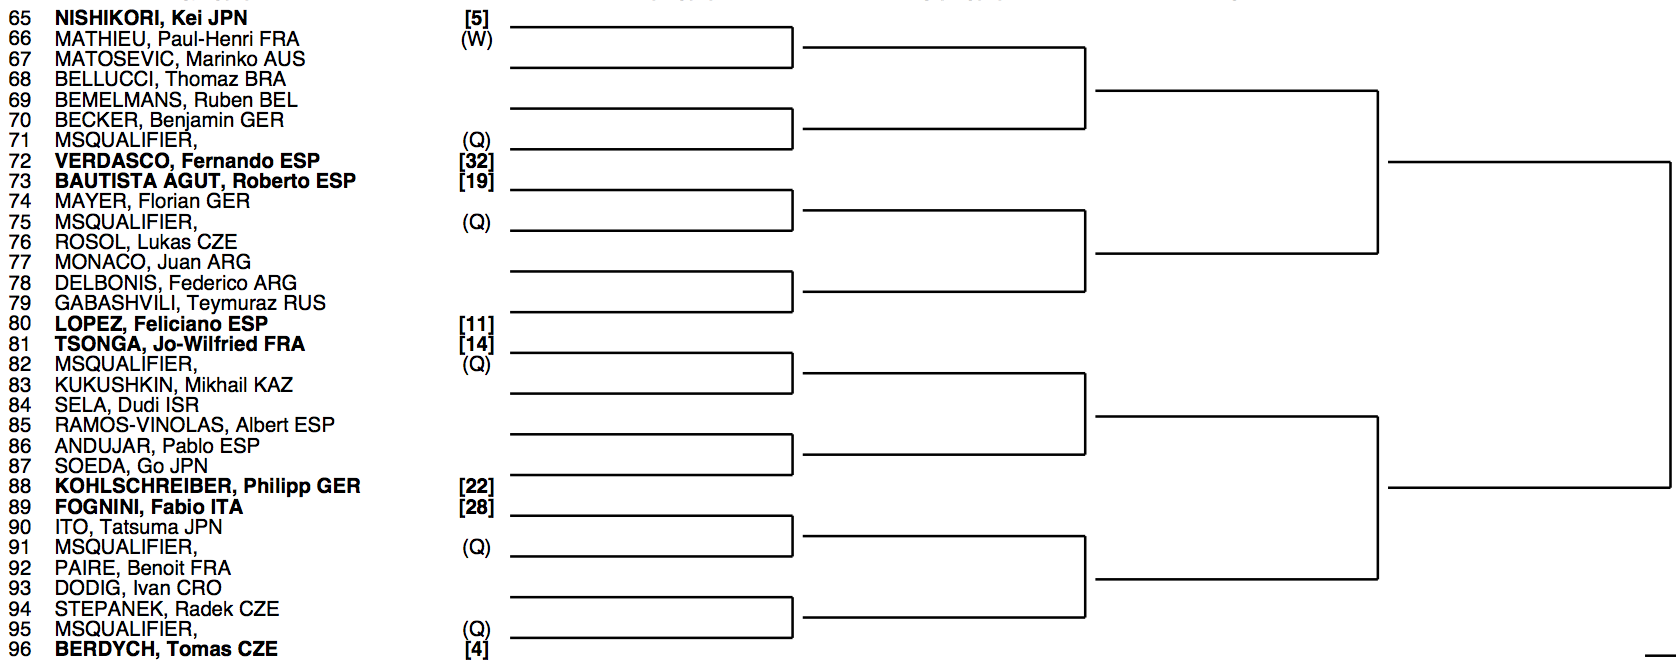 Roland Garros 2015 Draw 3:4